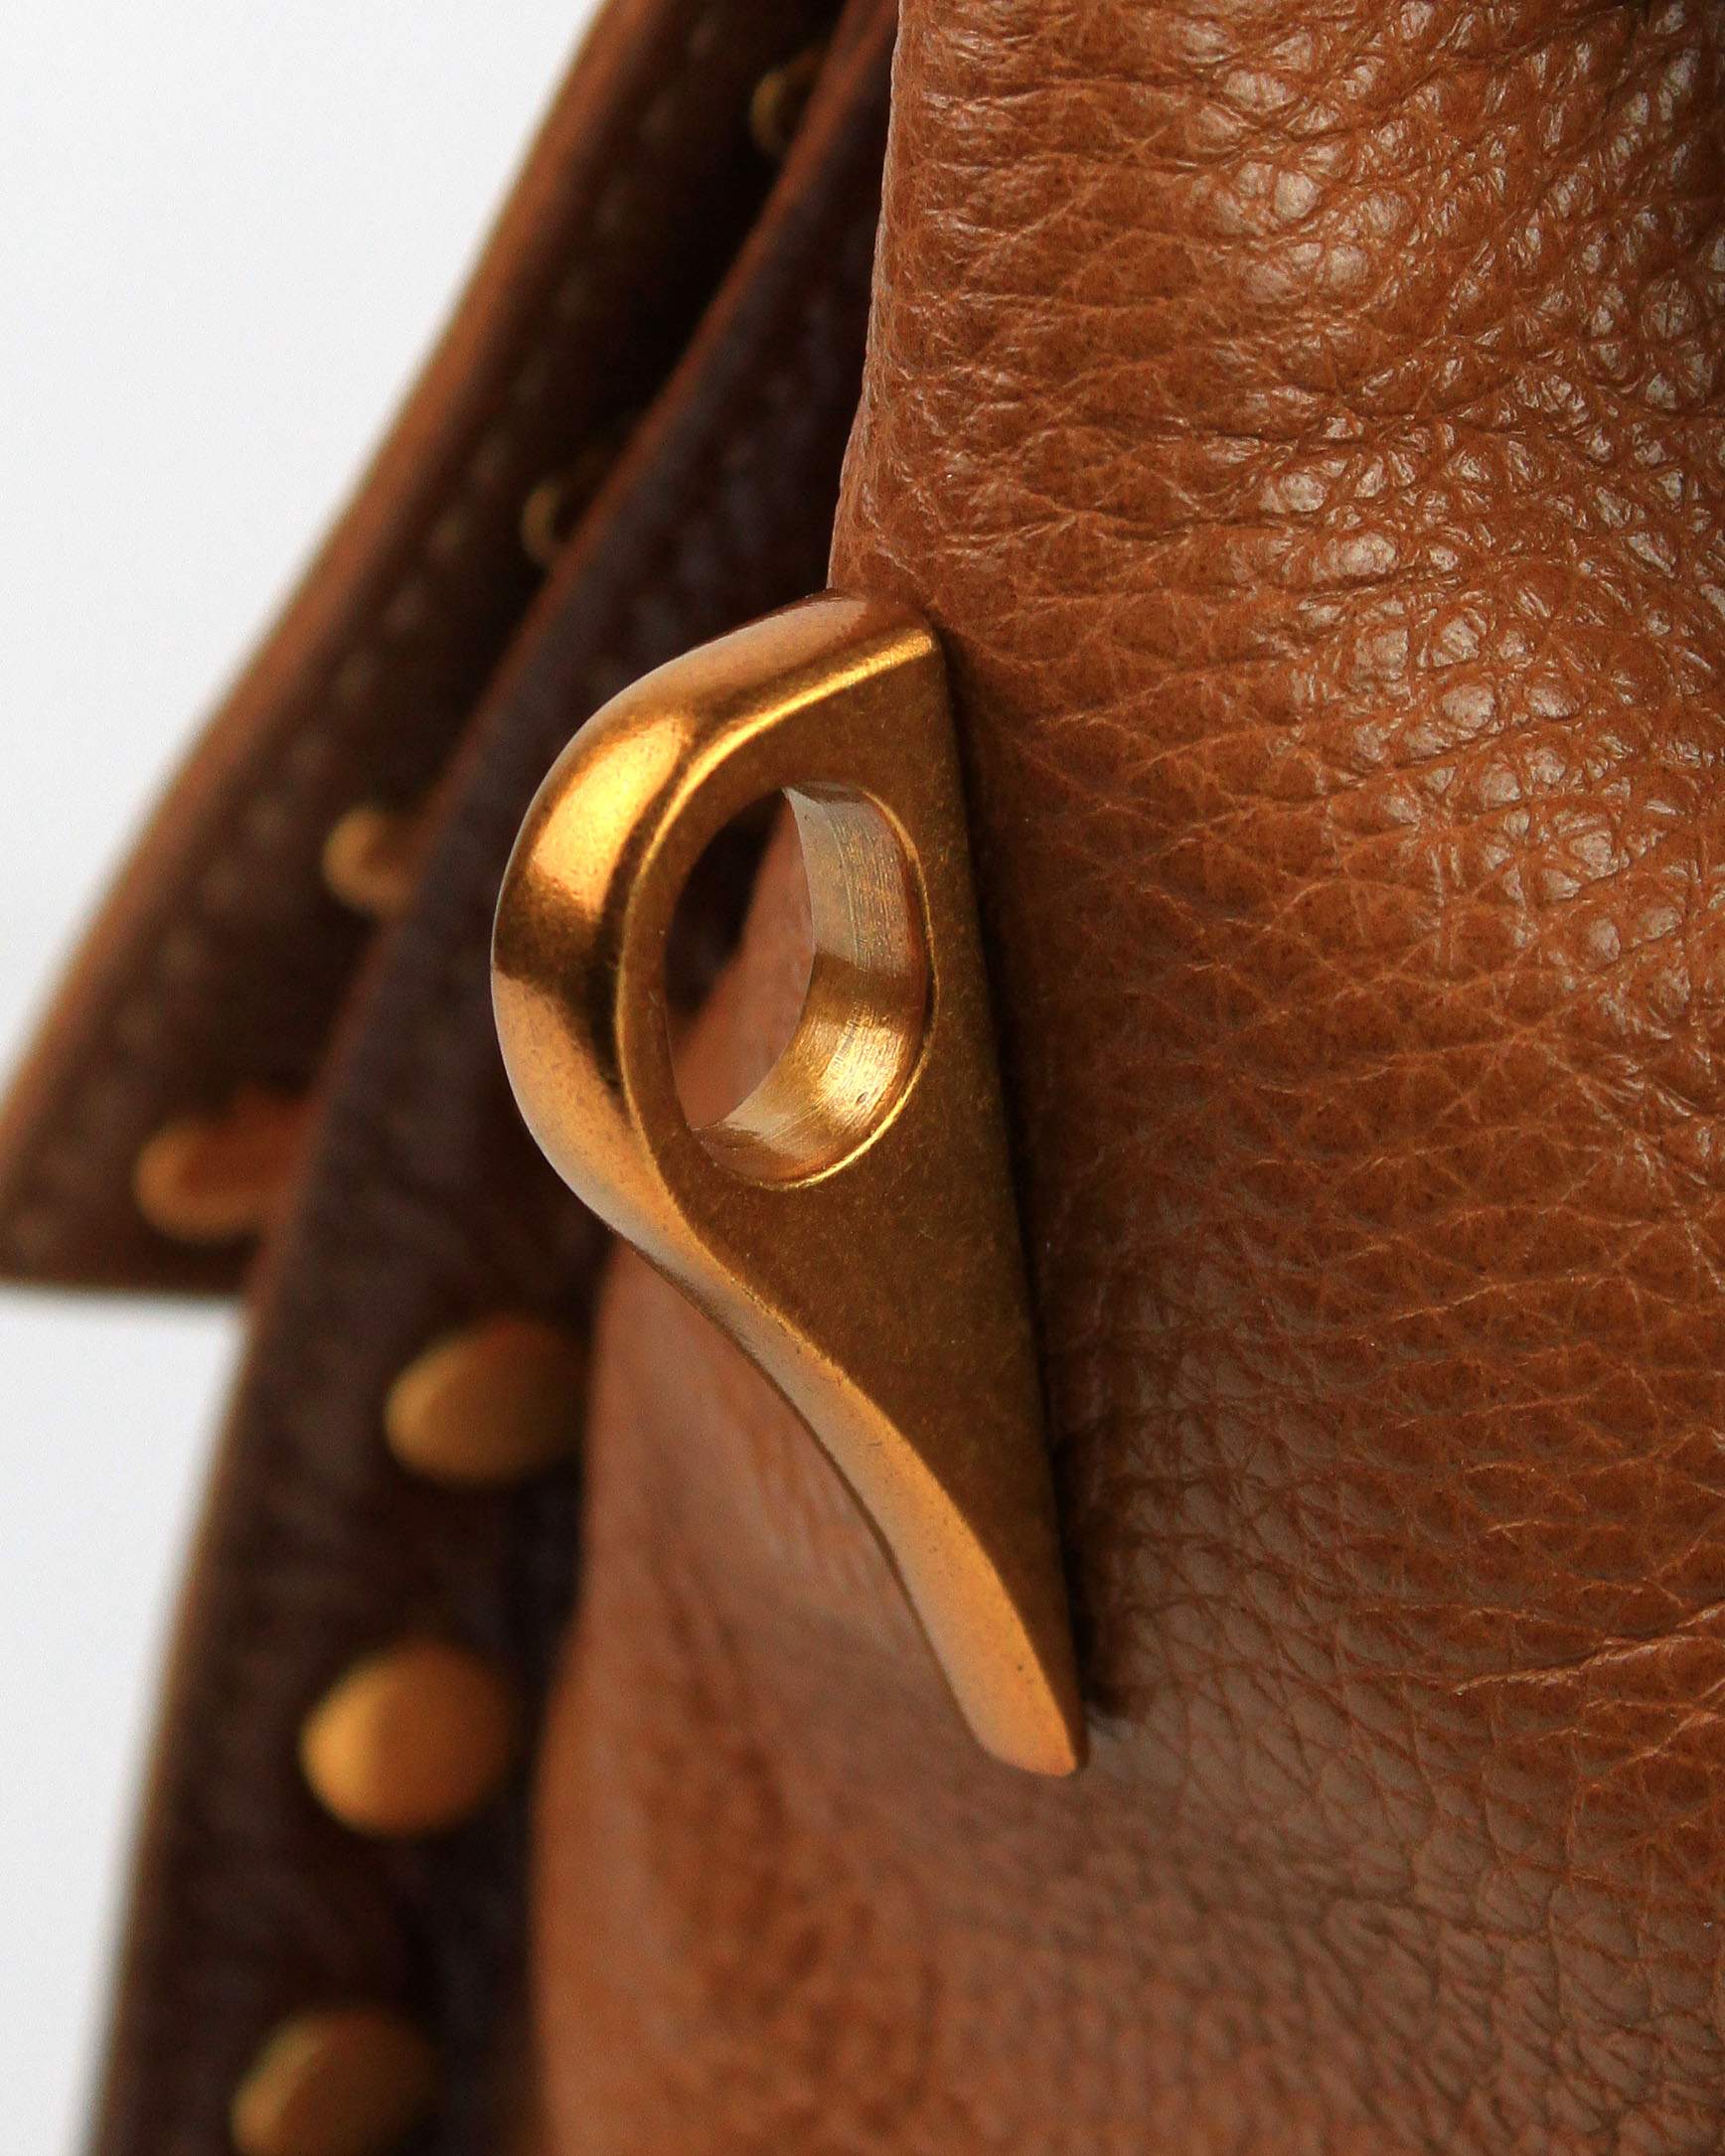 Prada Milled Leather Top Handle - 8028 Tan